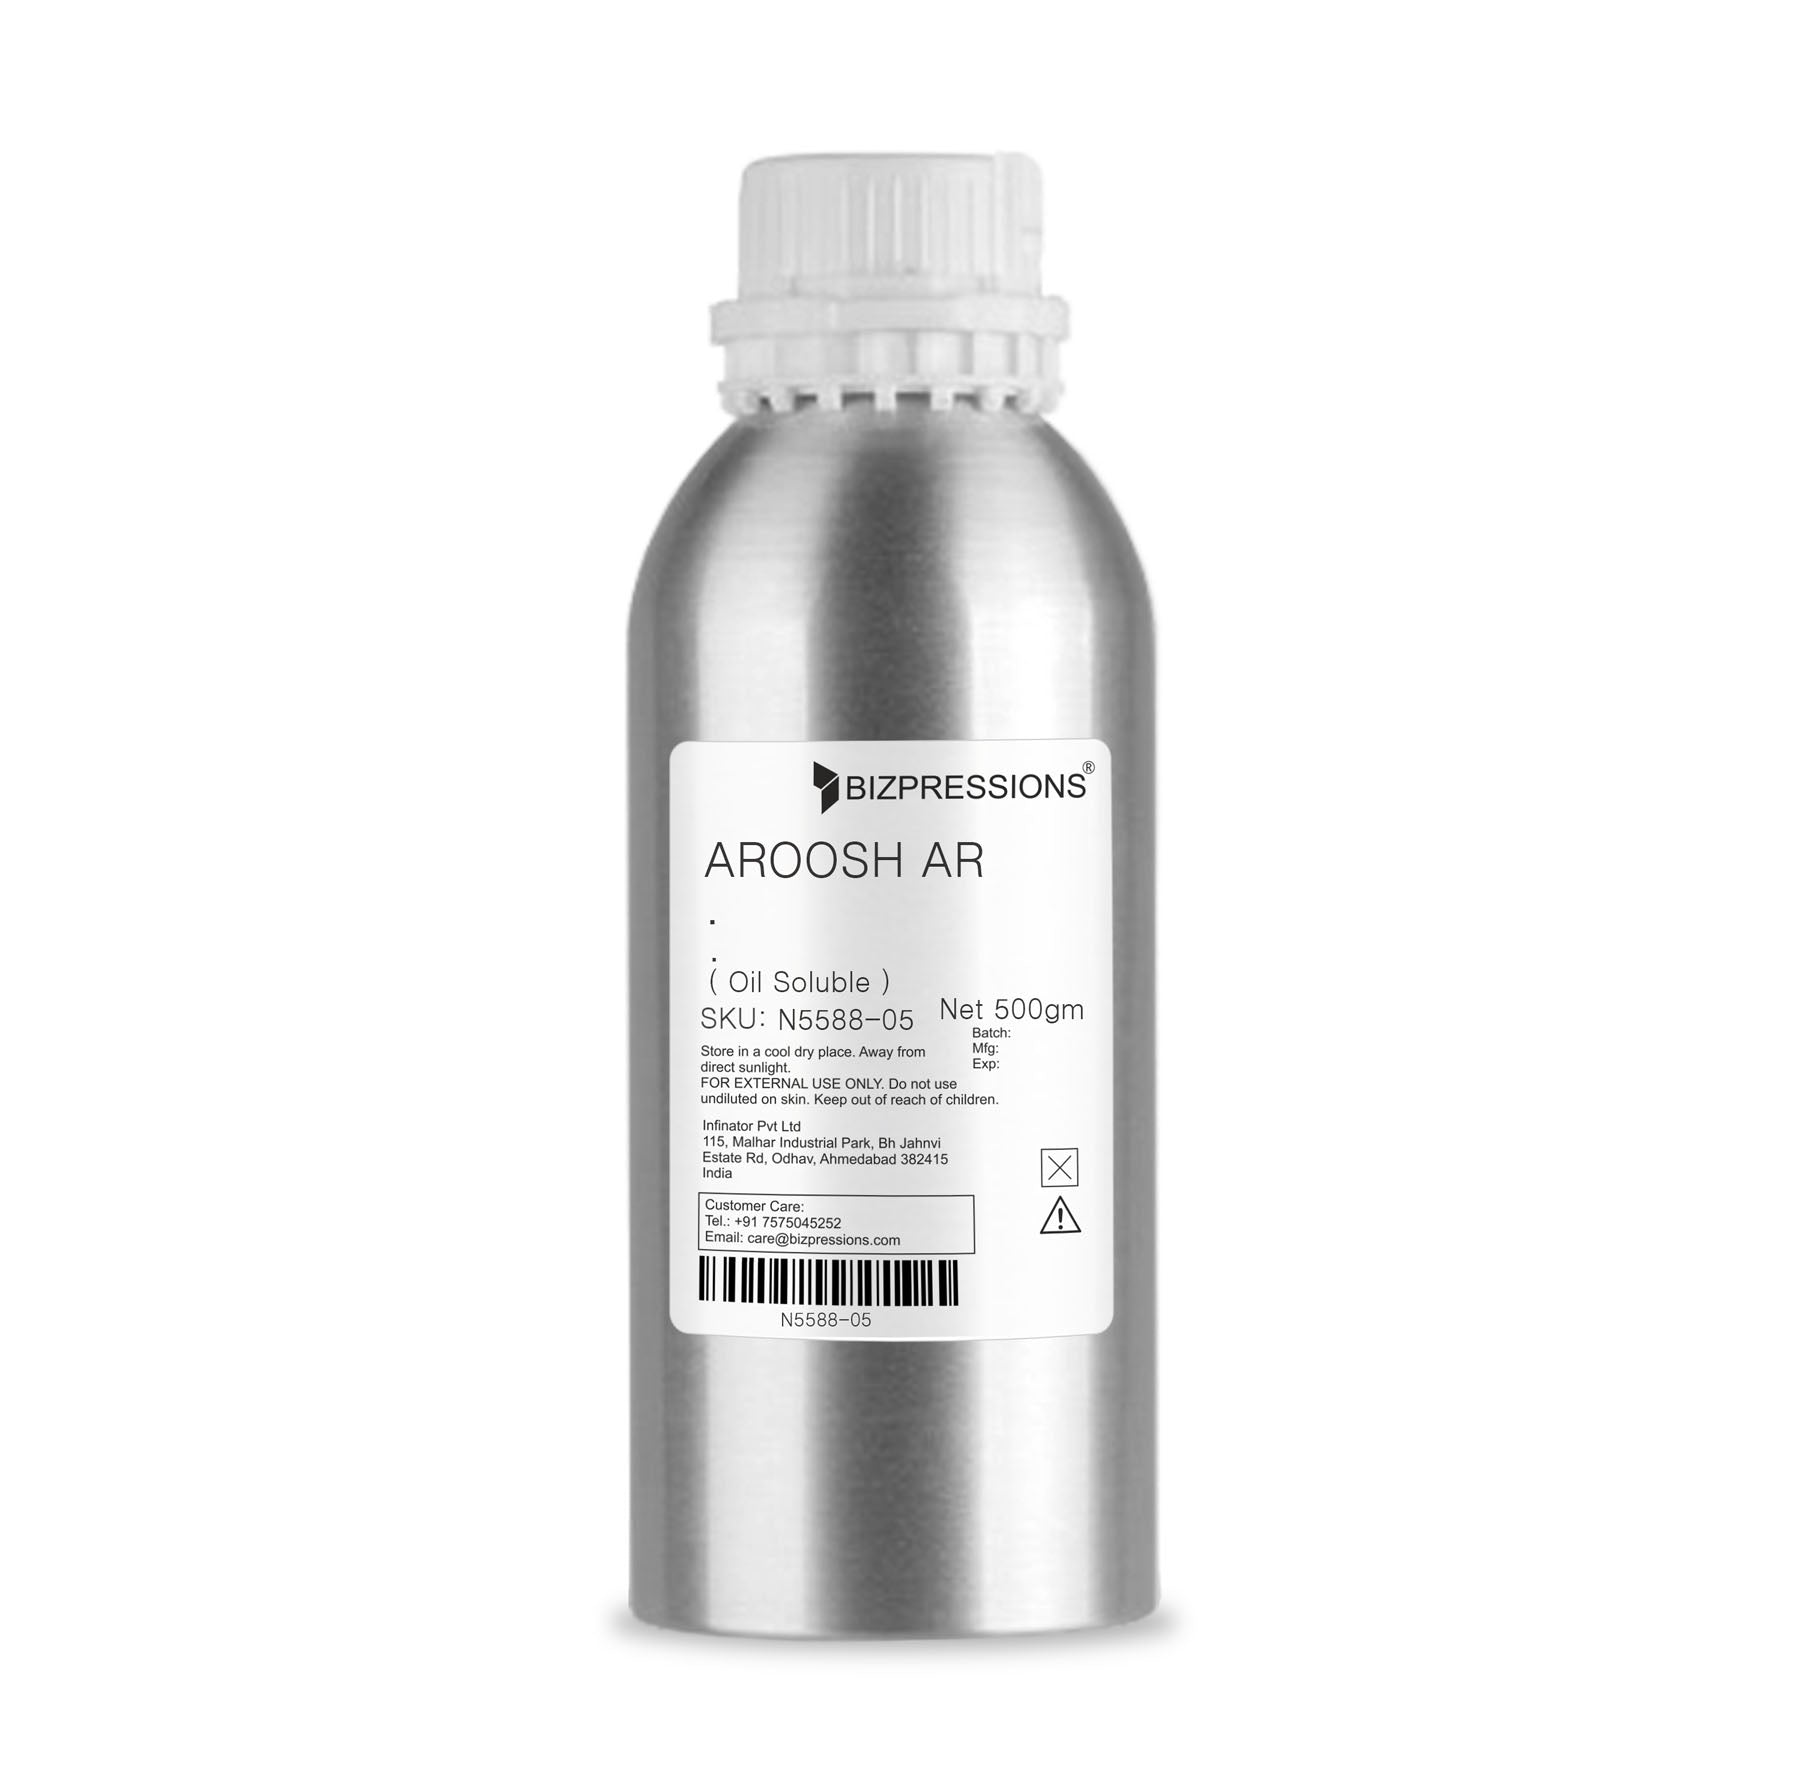 AROOSH AR - Fragrance ( Oil Soluble ) - 500 gm